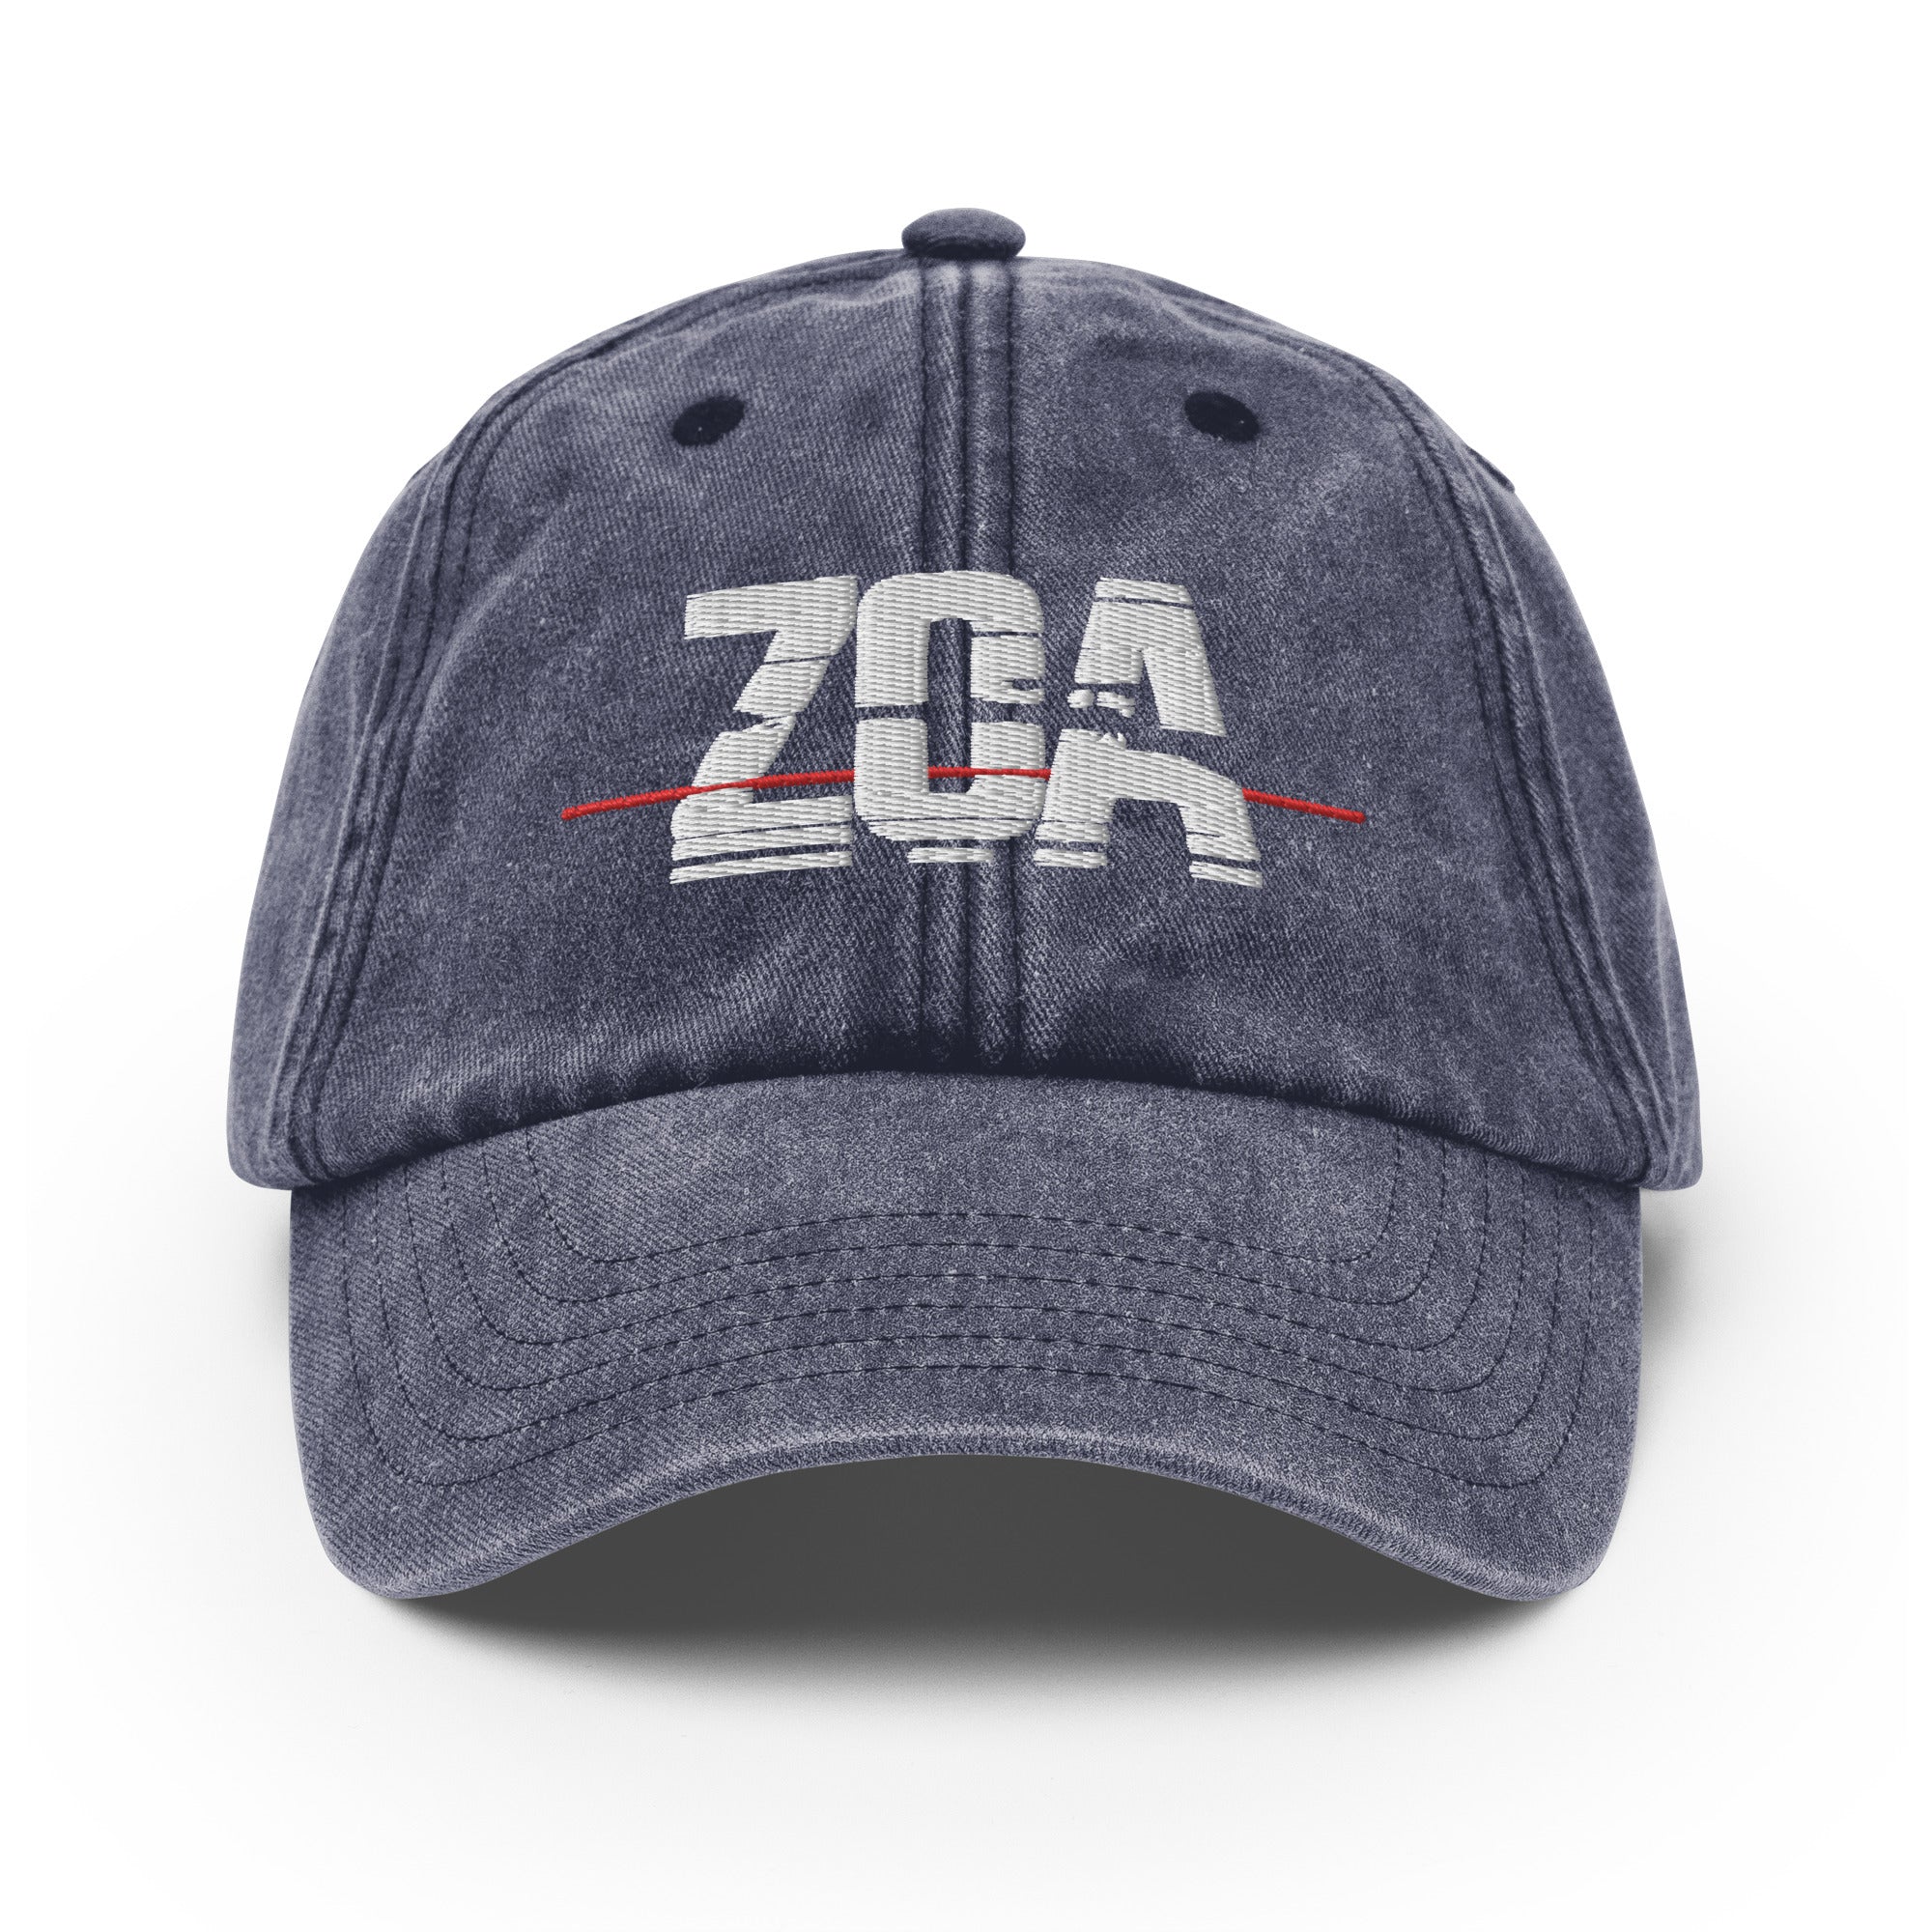 ZOA__ - Vintage-Dad-Cap mit Stick